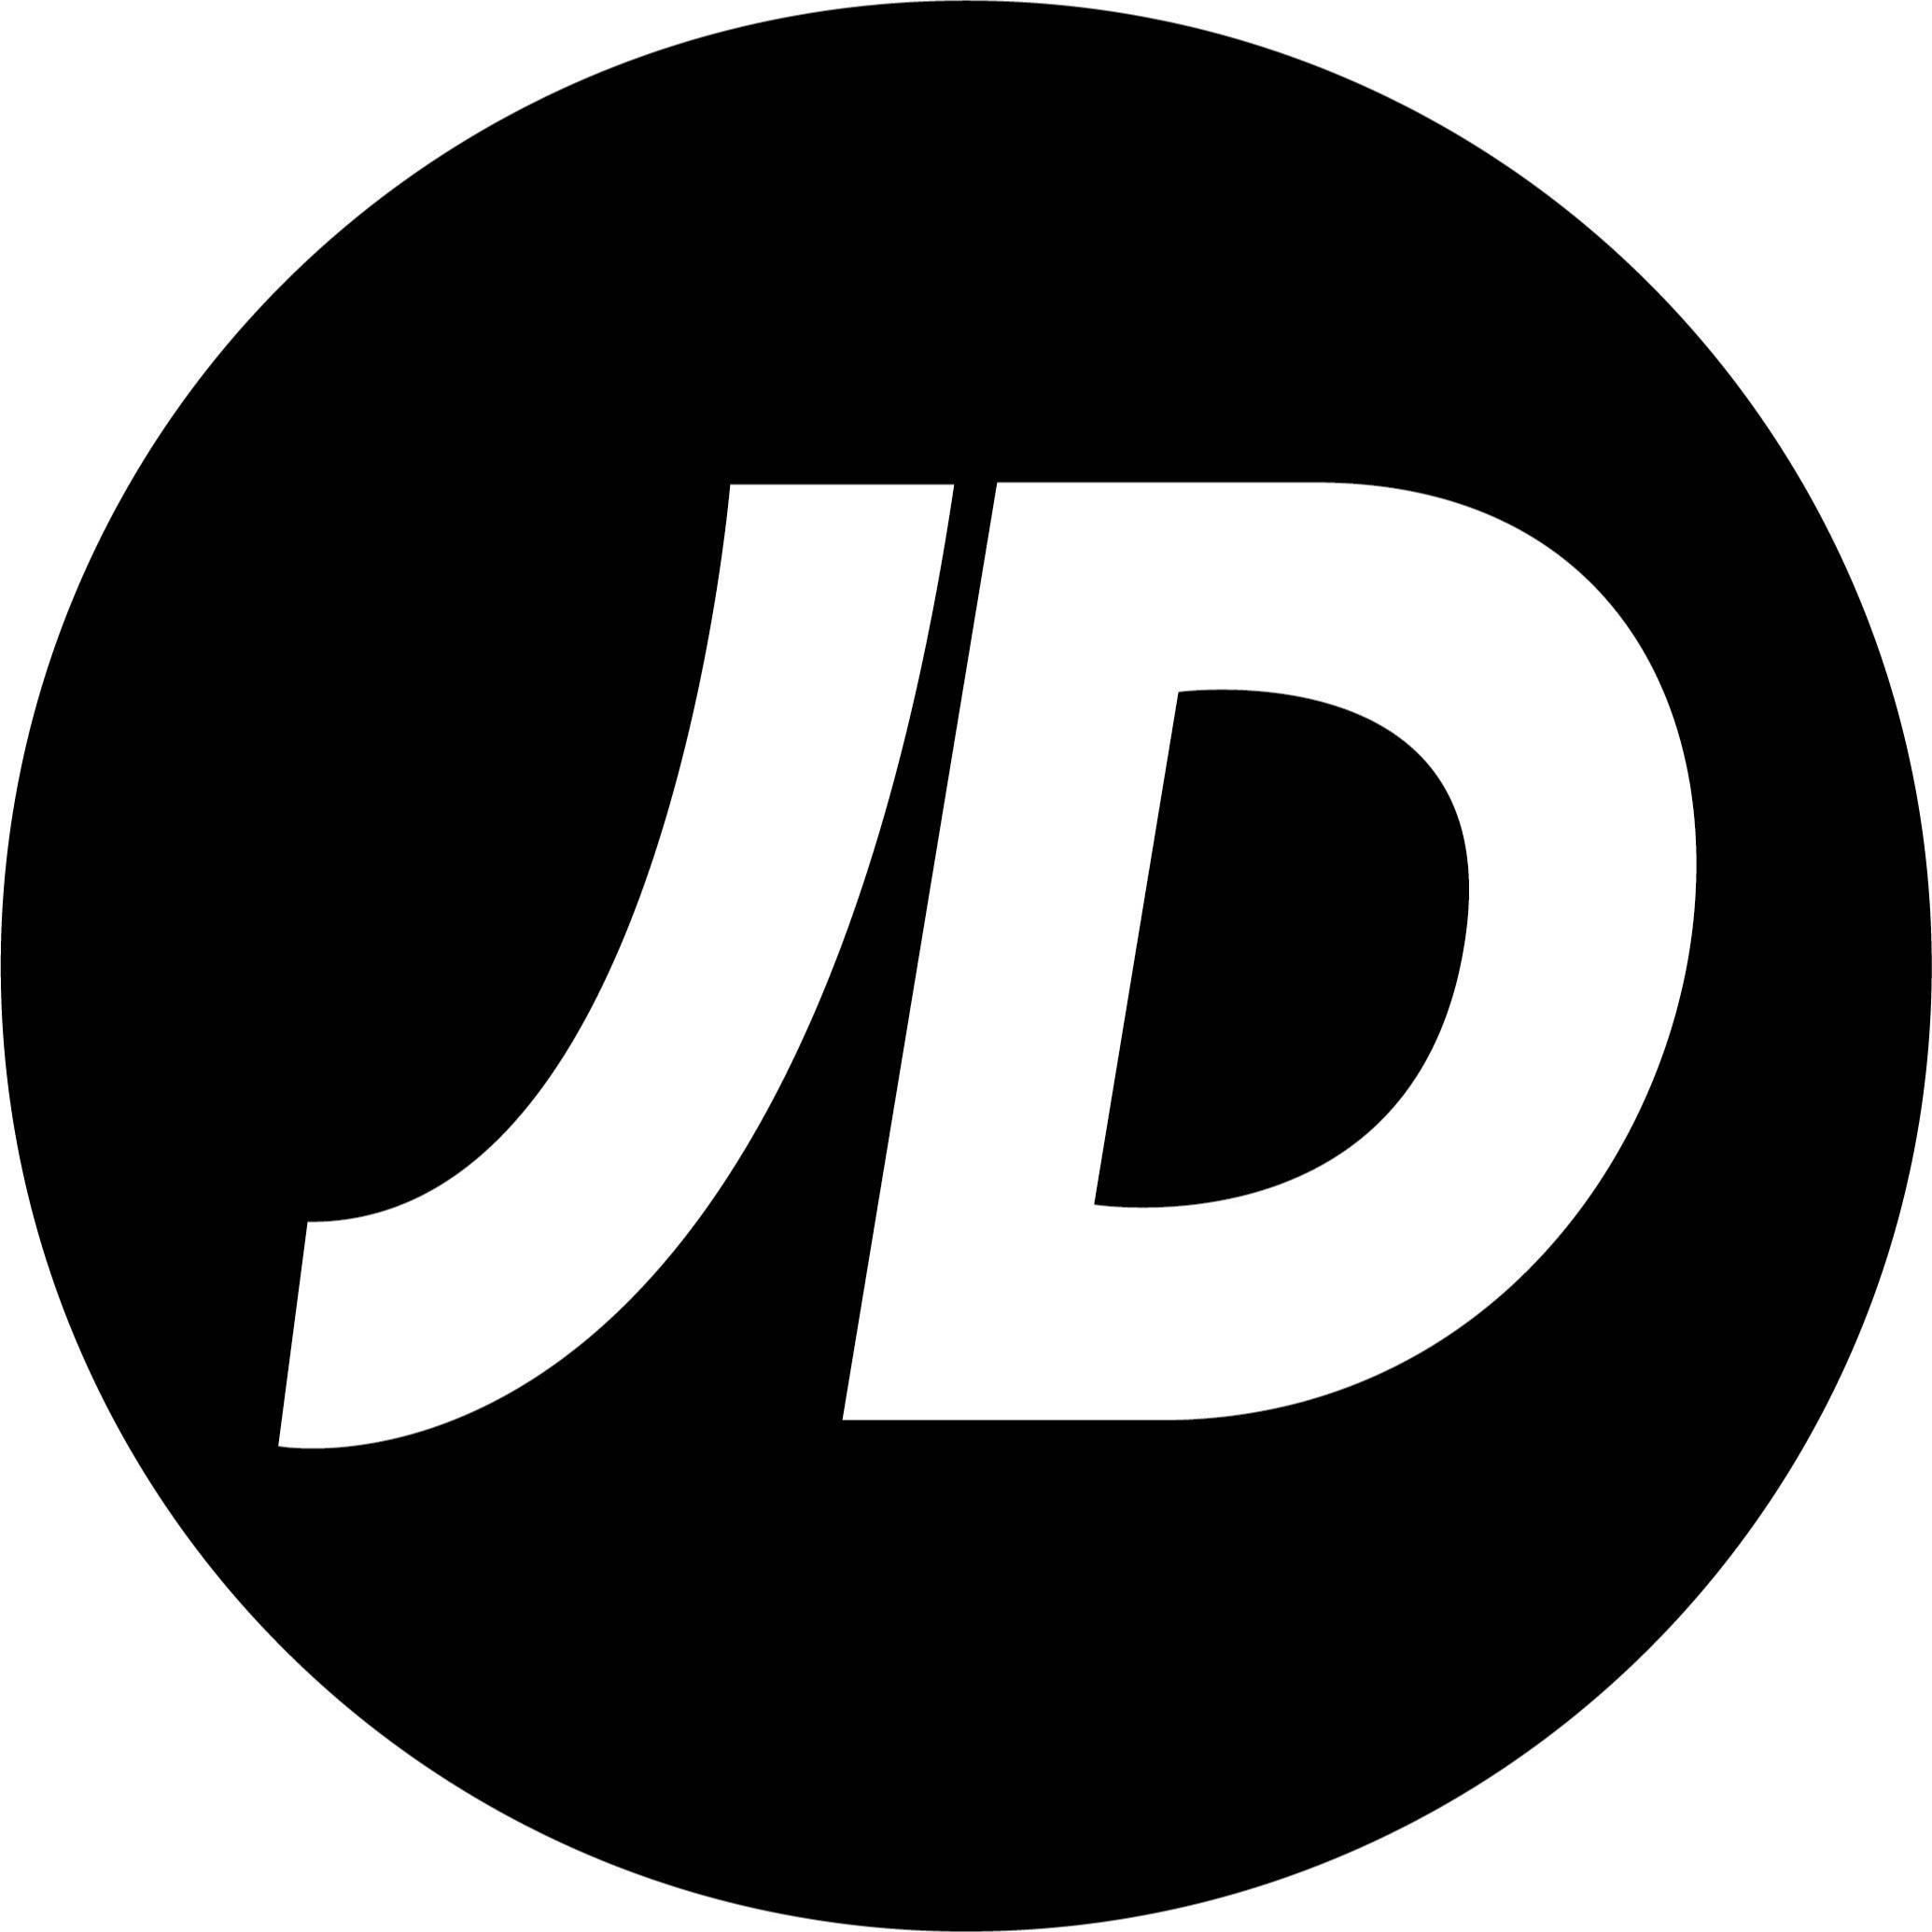 JD Sports - Abbigliamento sportivo - produzione e ingrosso Pavone Canavese